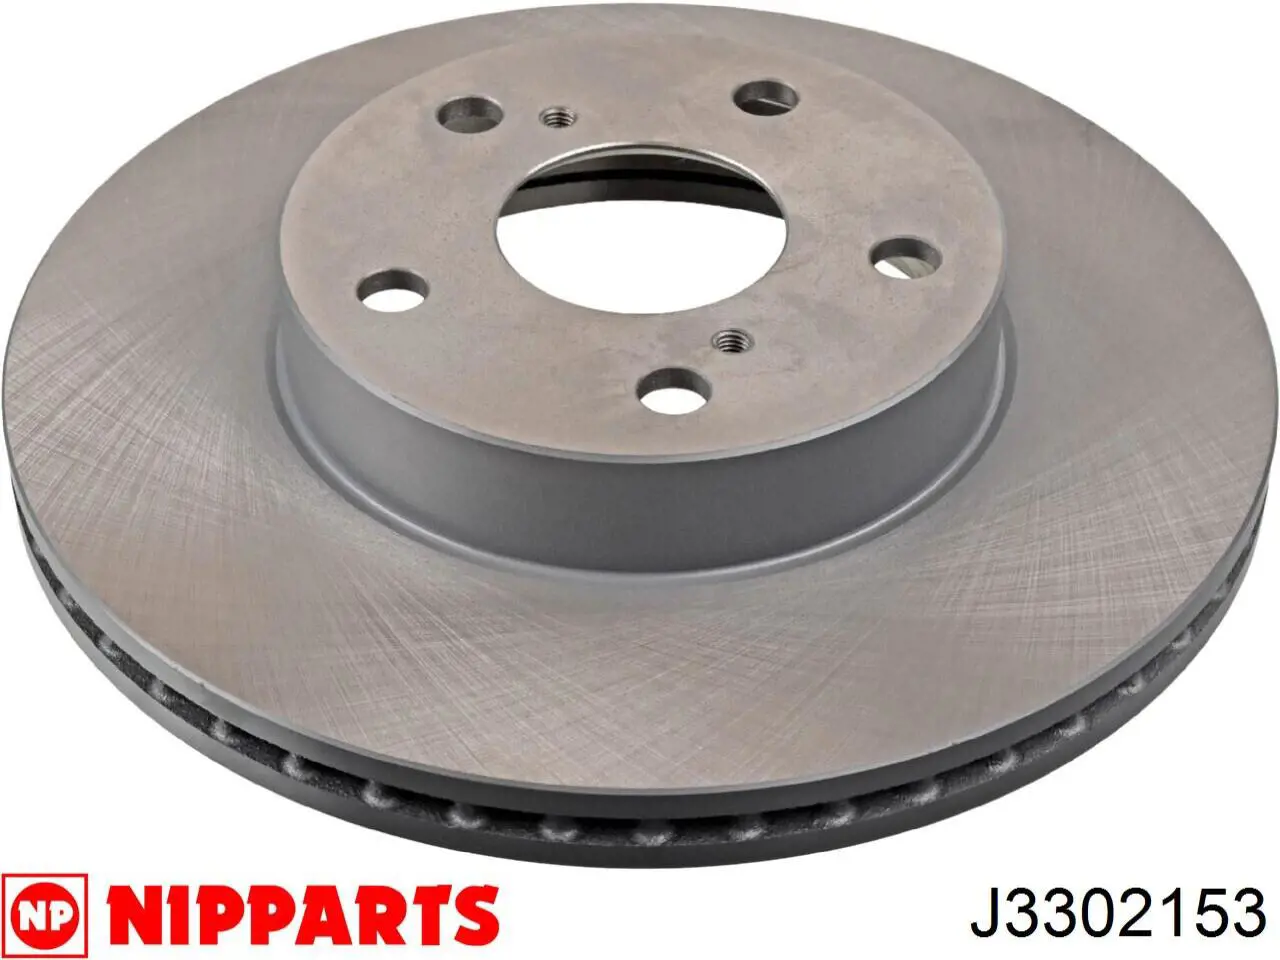 J3302153 Nipparts disco de freno delantero